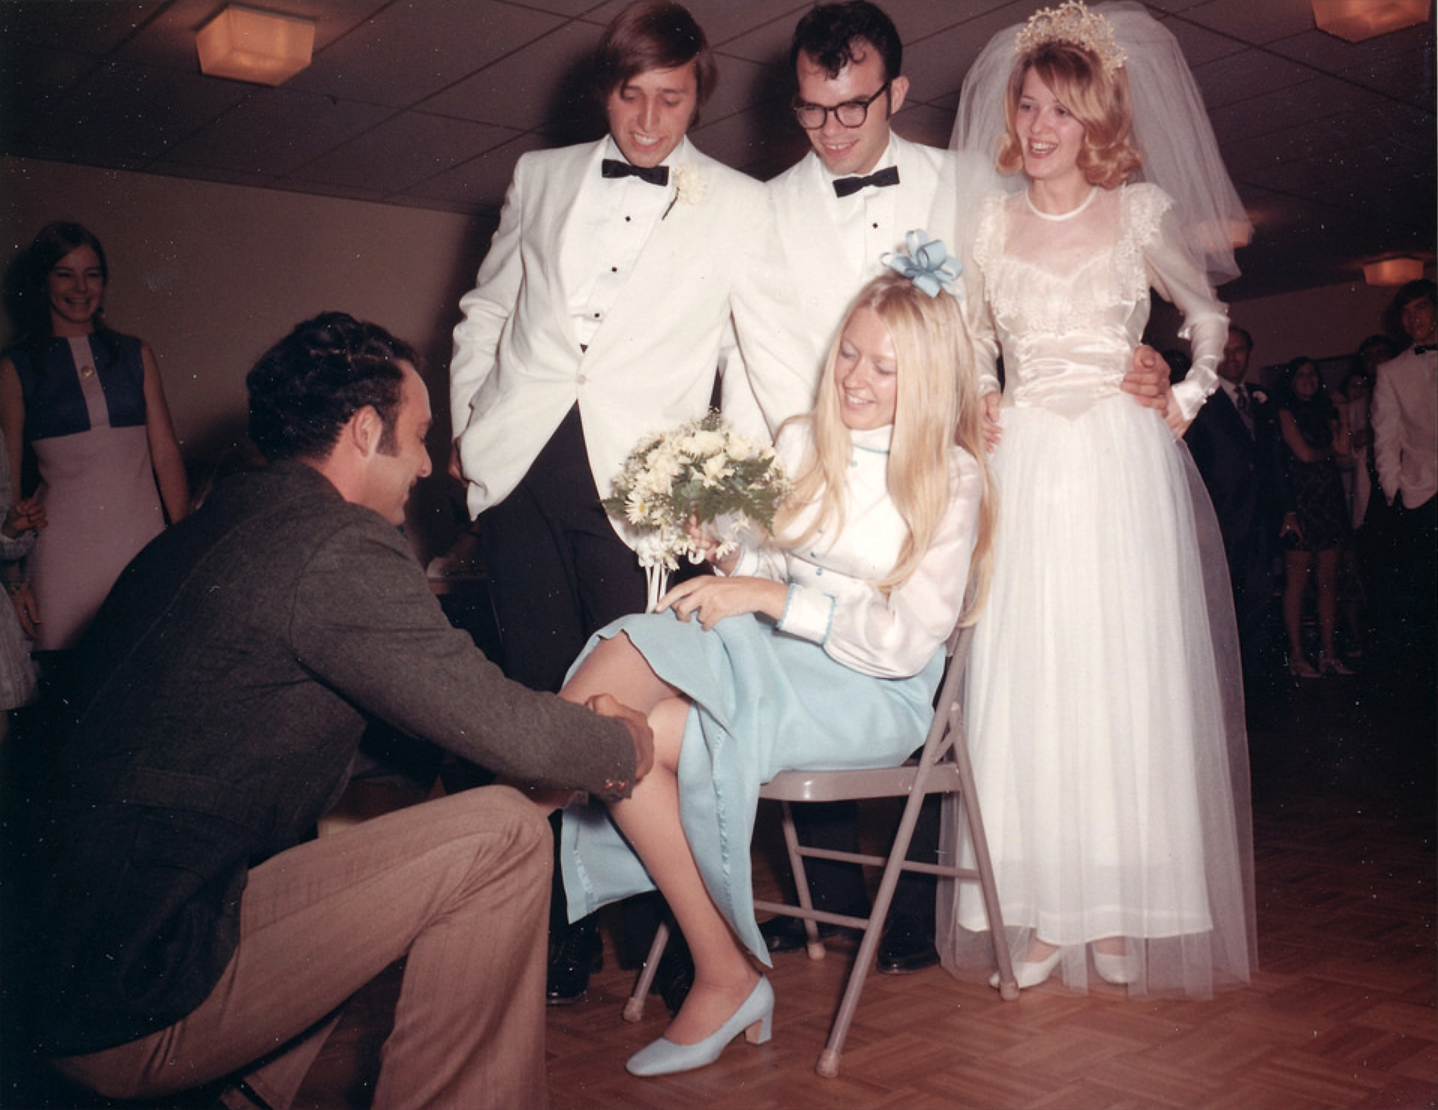 The Garter Toss: Vintage Photographs of a Wedding Tradition - Flashbak